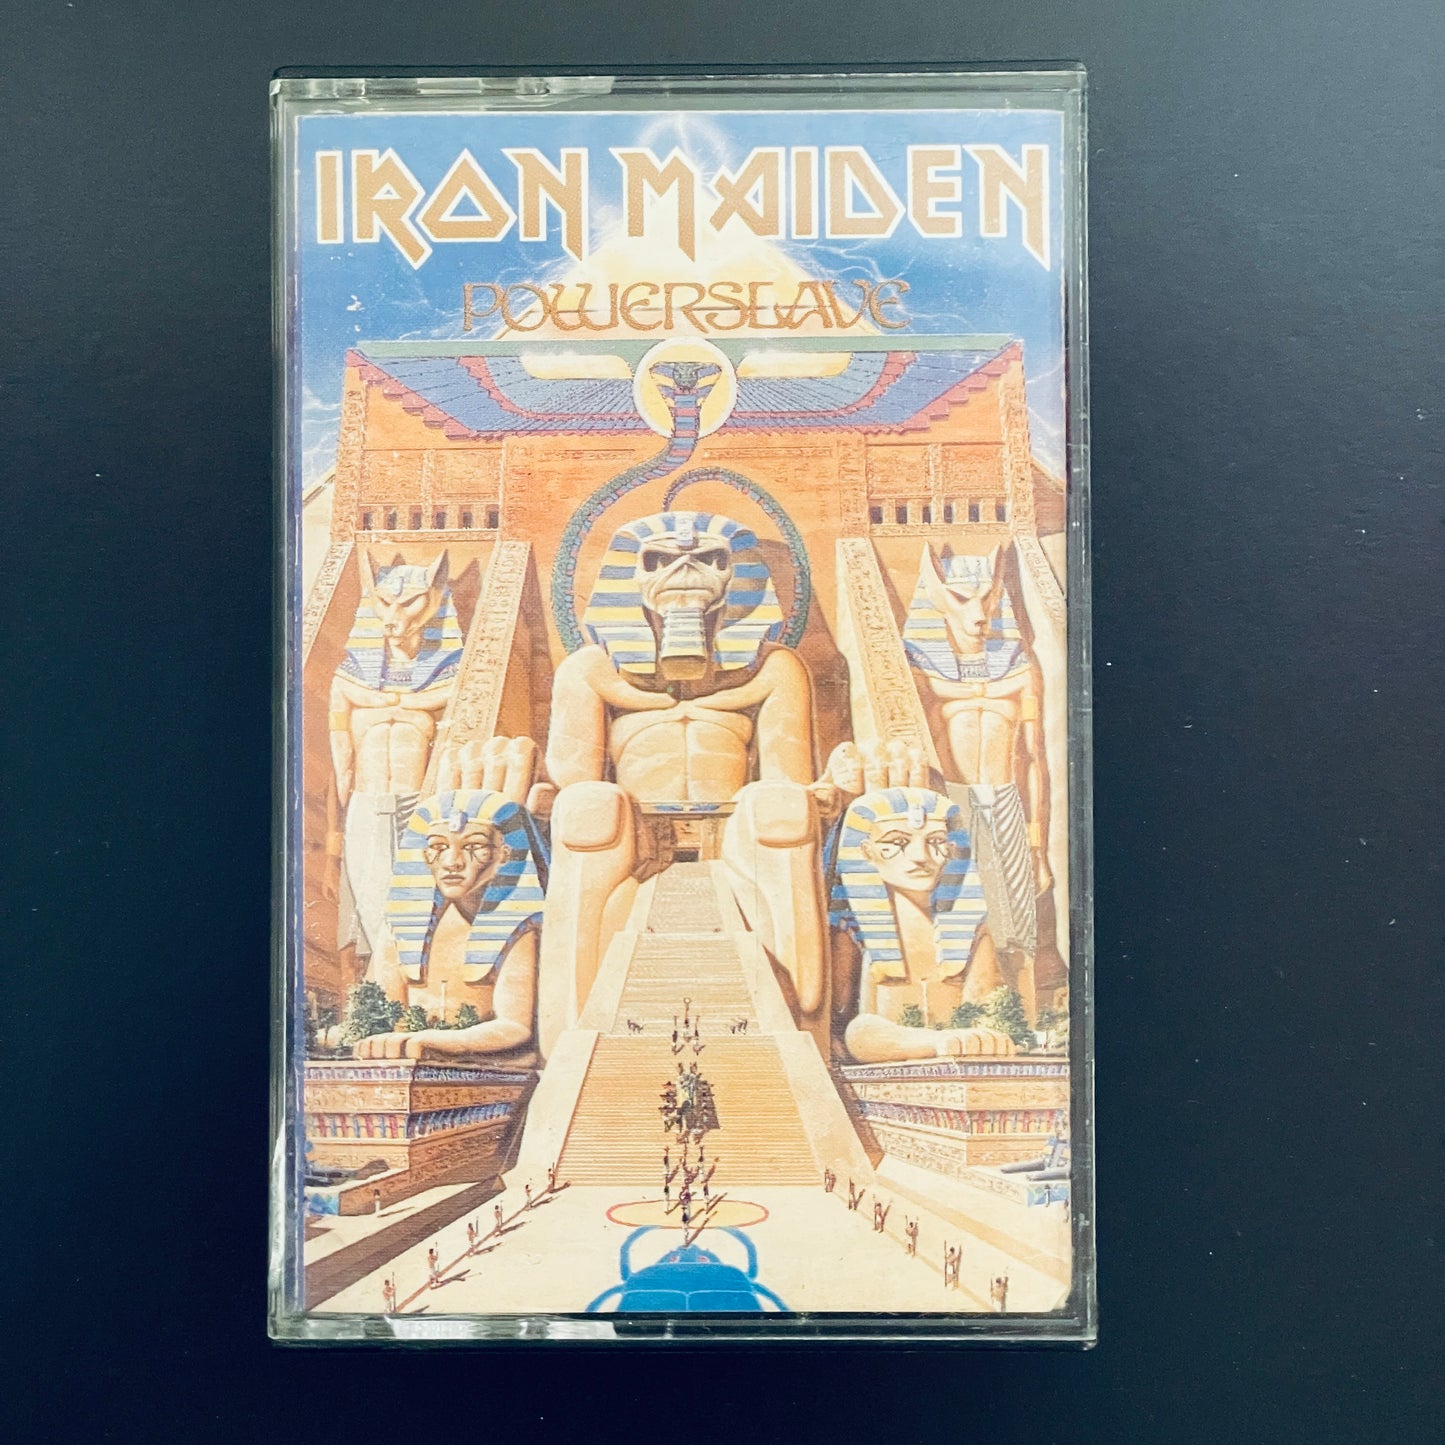 Iron Maiden - Powerslave original cassette tape (used)